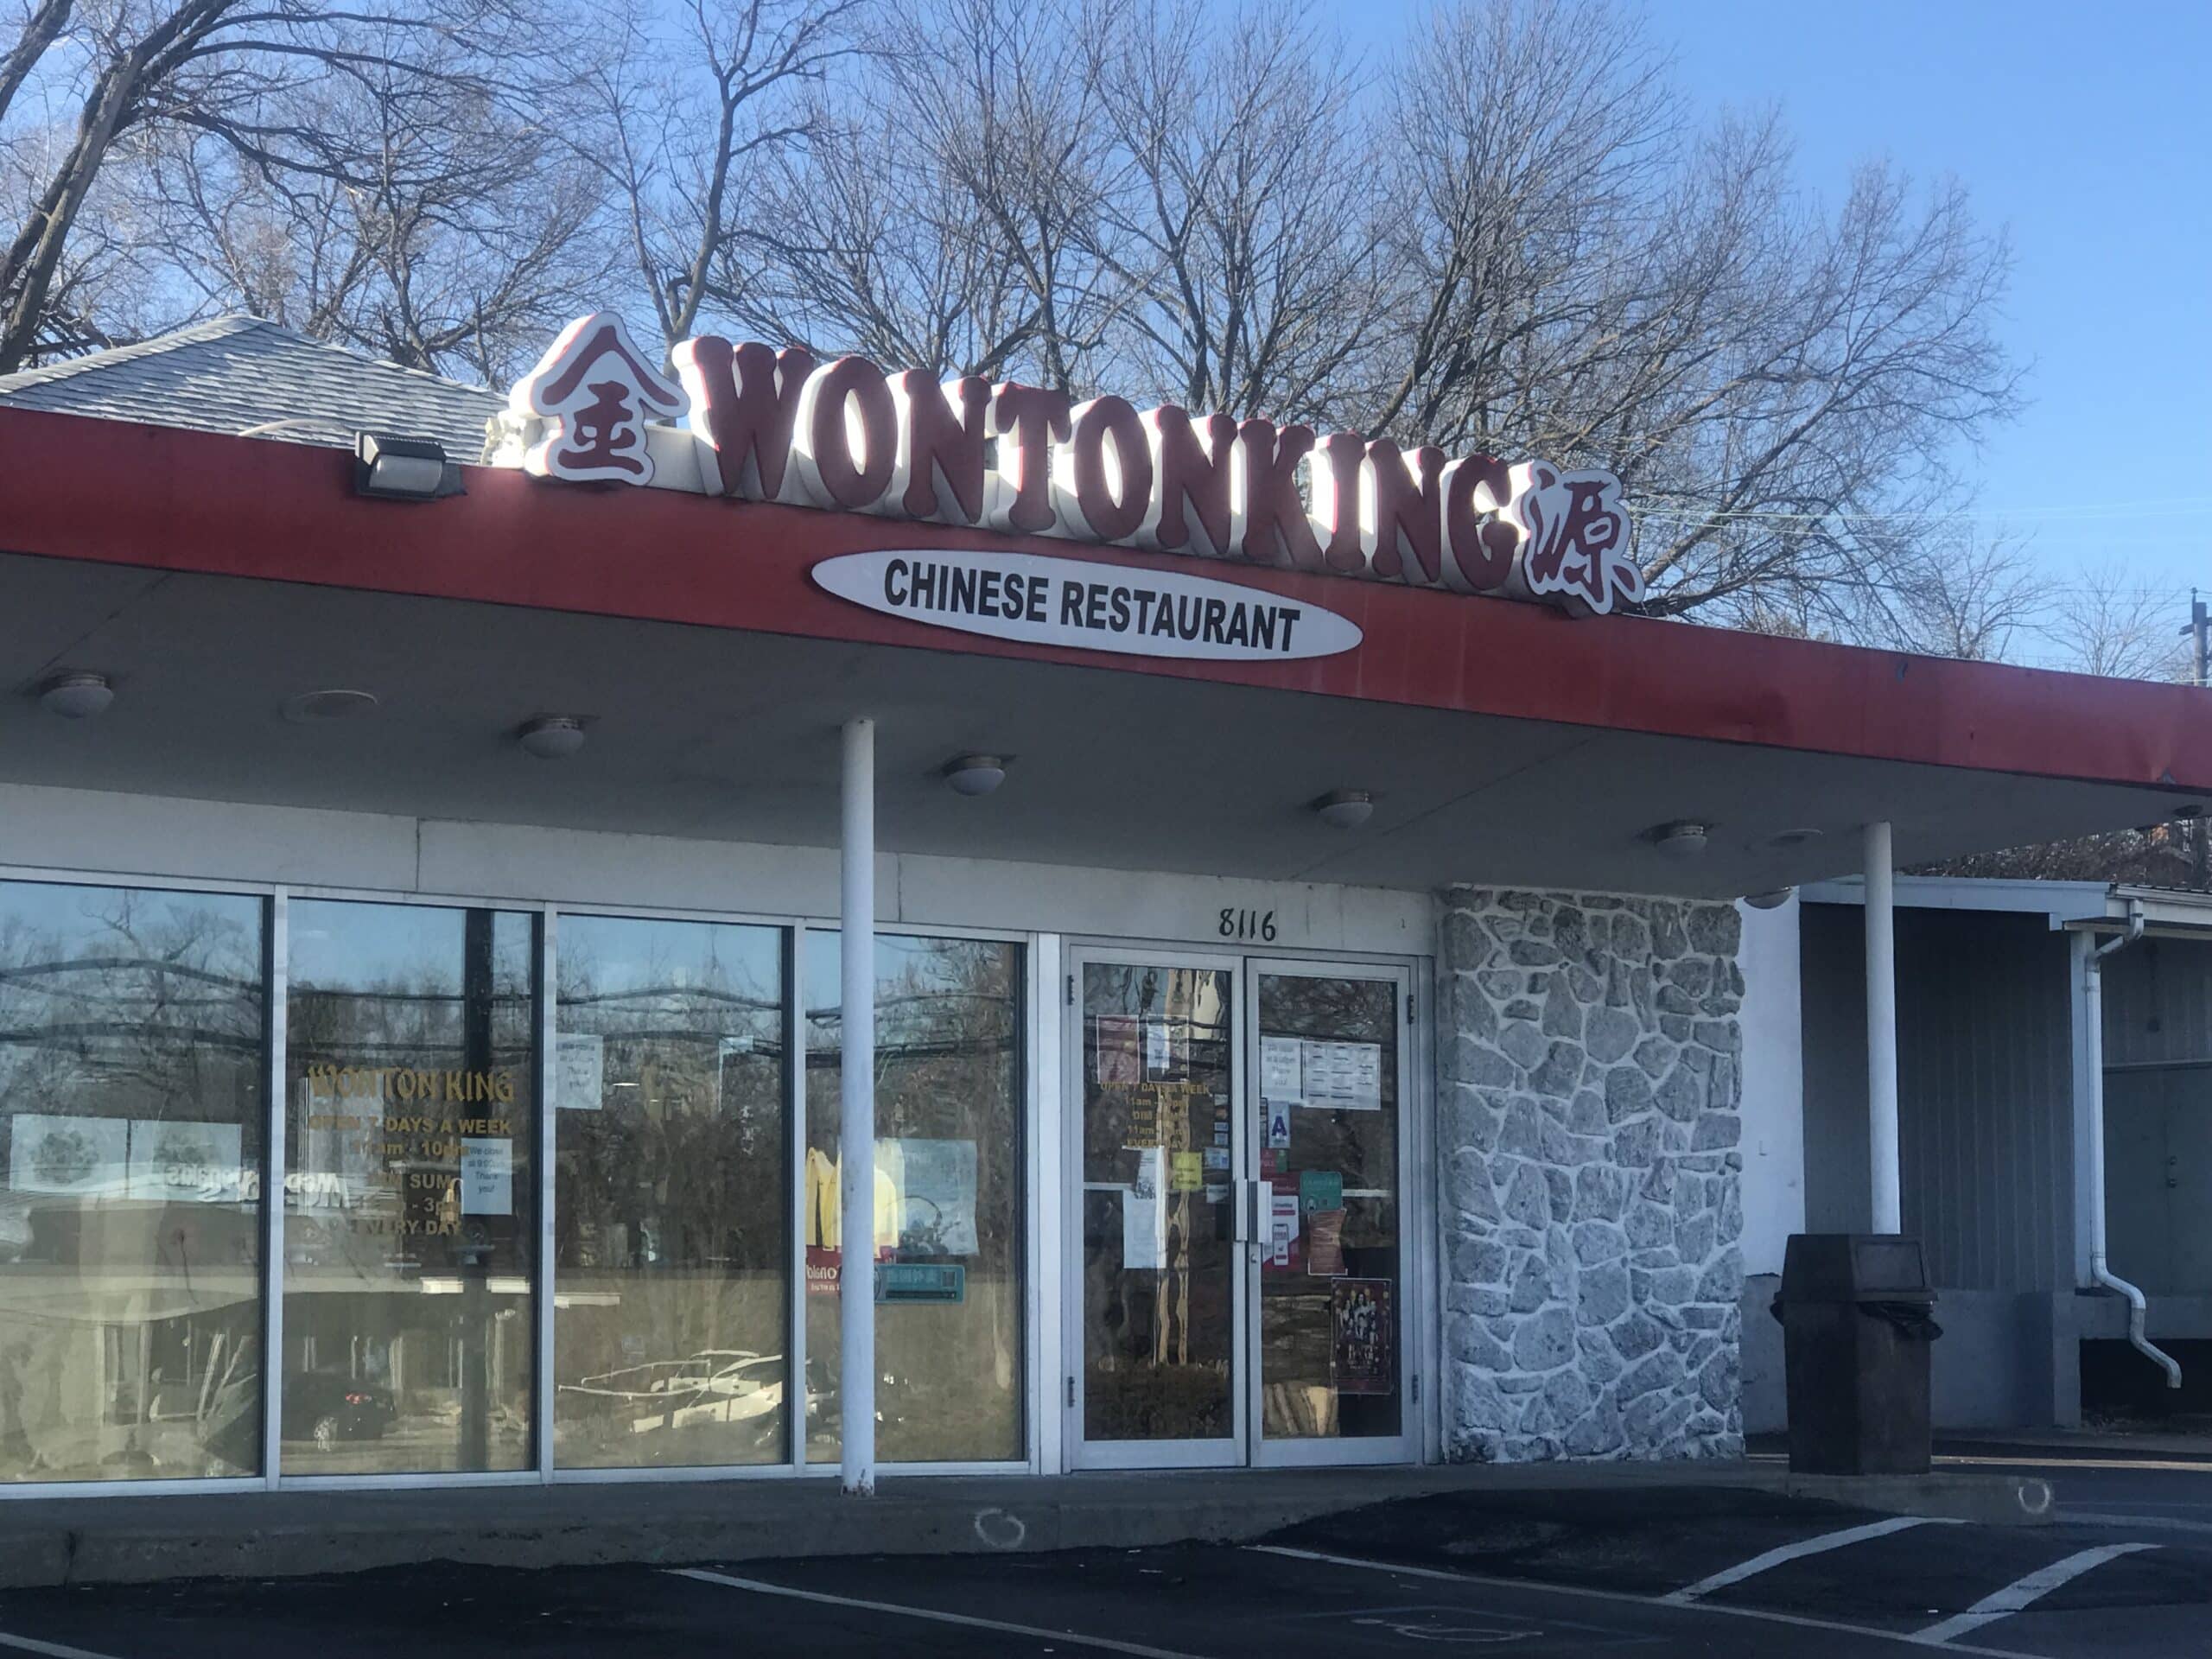 Wonton King – the Best Chinese Restaurant in Missouri